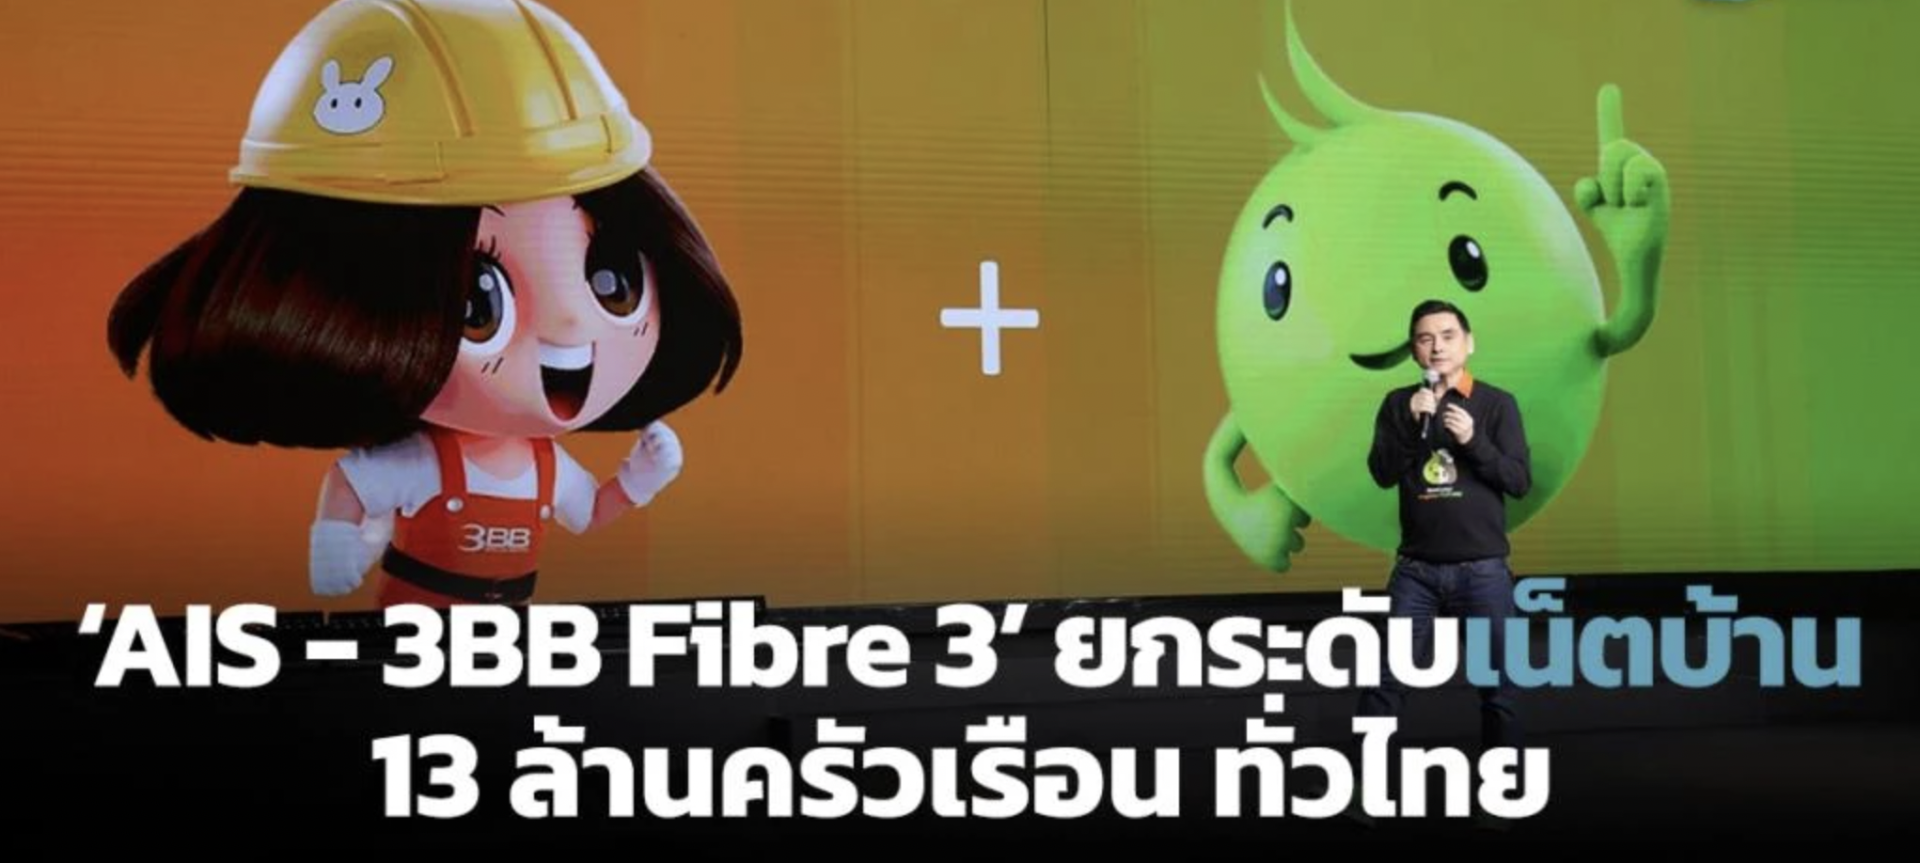 AIS-3BB Fibre 3 ยกระดับเน็ตบ้าน 13 ล้านครัวเรือนทั่วไทย